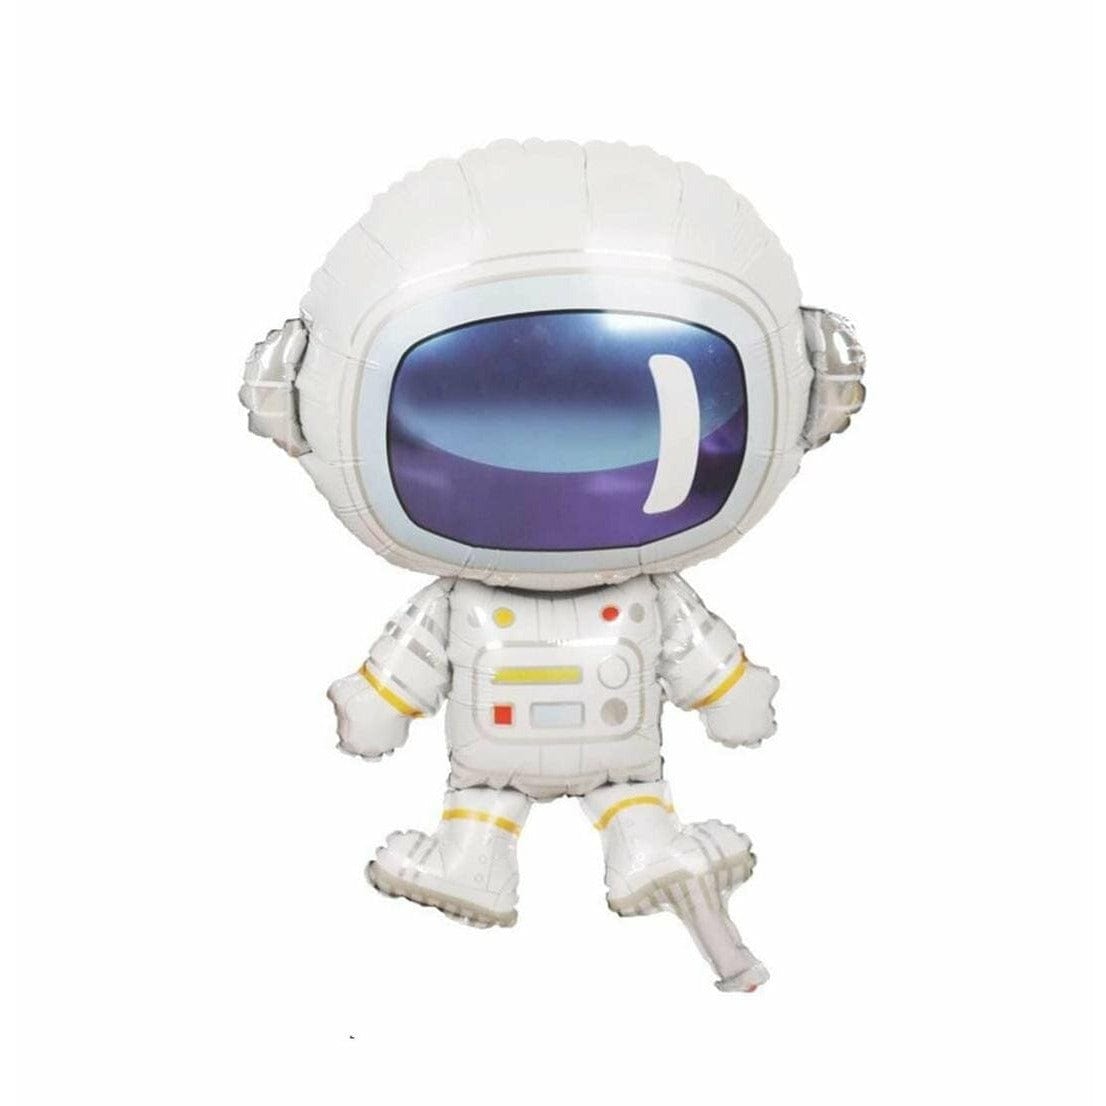 Agarwal Toys Decoration Supplies Large Rocket Astronaut Foil Balloon